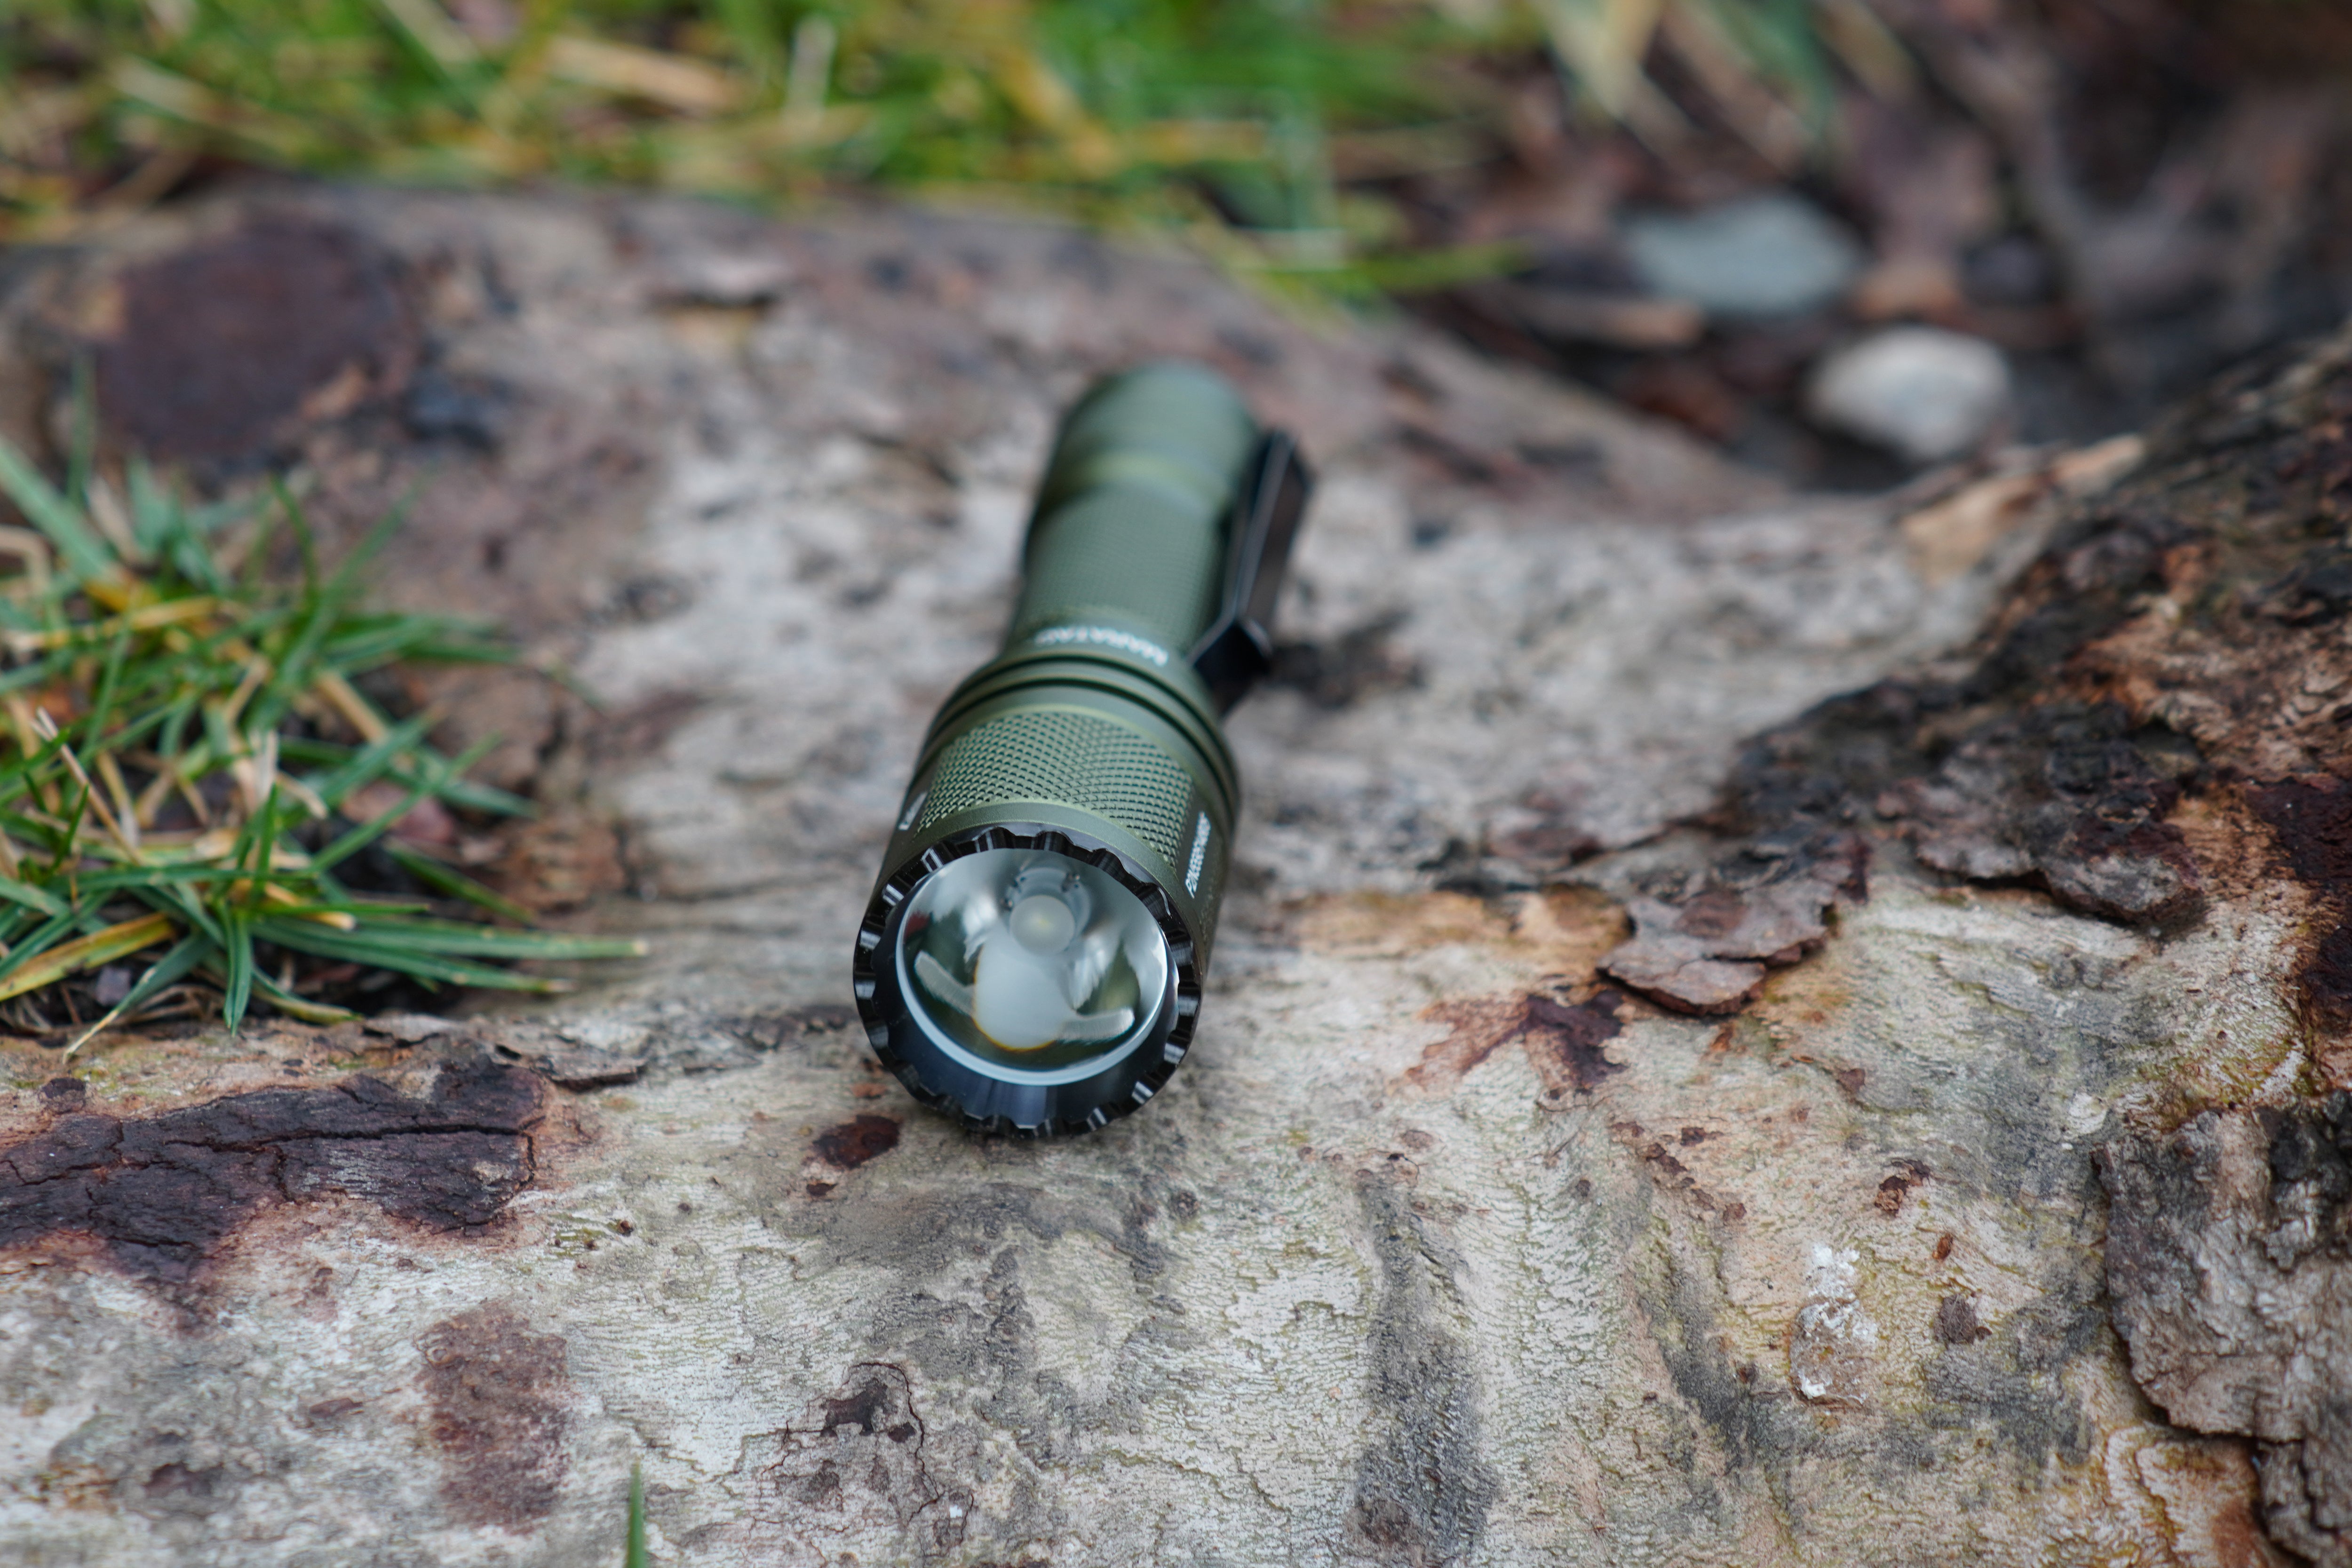 OD Green - Tactical Defender P16 Dual Switch / Acebeam® & Maratac® Colab Flashlight - CC Exclusive!